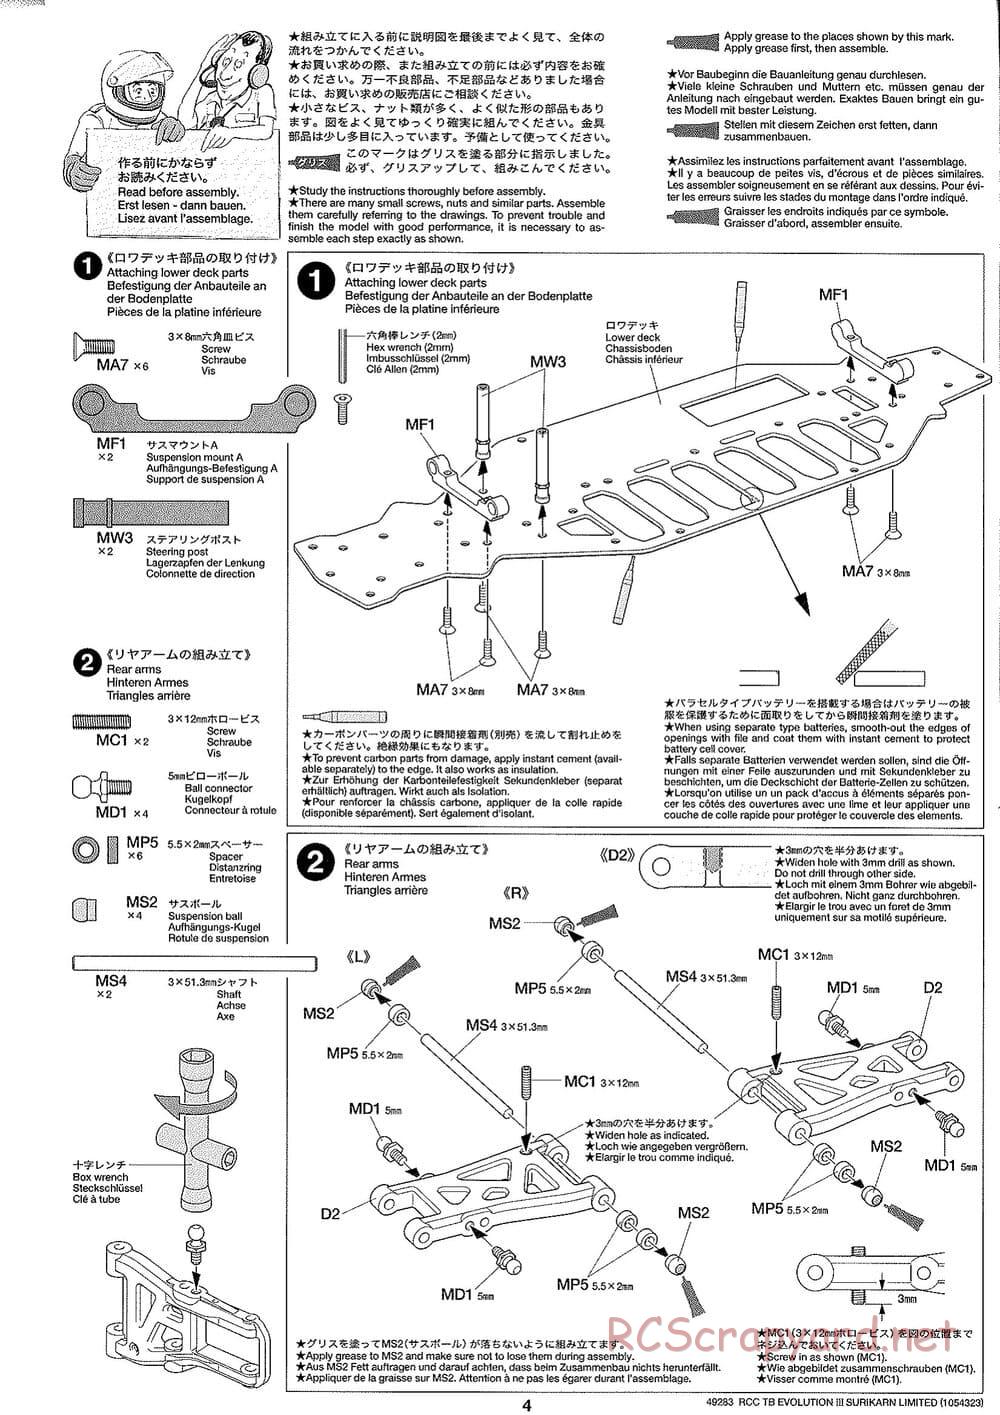 Tamiya - TB Evolution III Surikarn Limited Chassis - Manual - Page 4